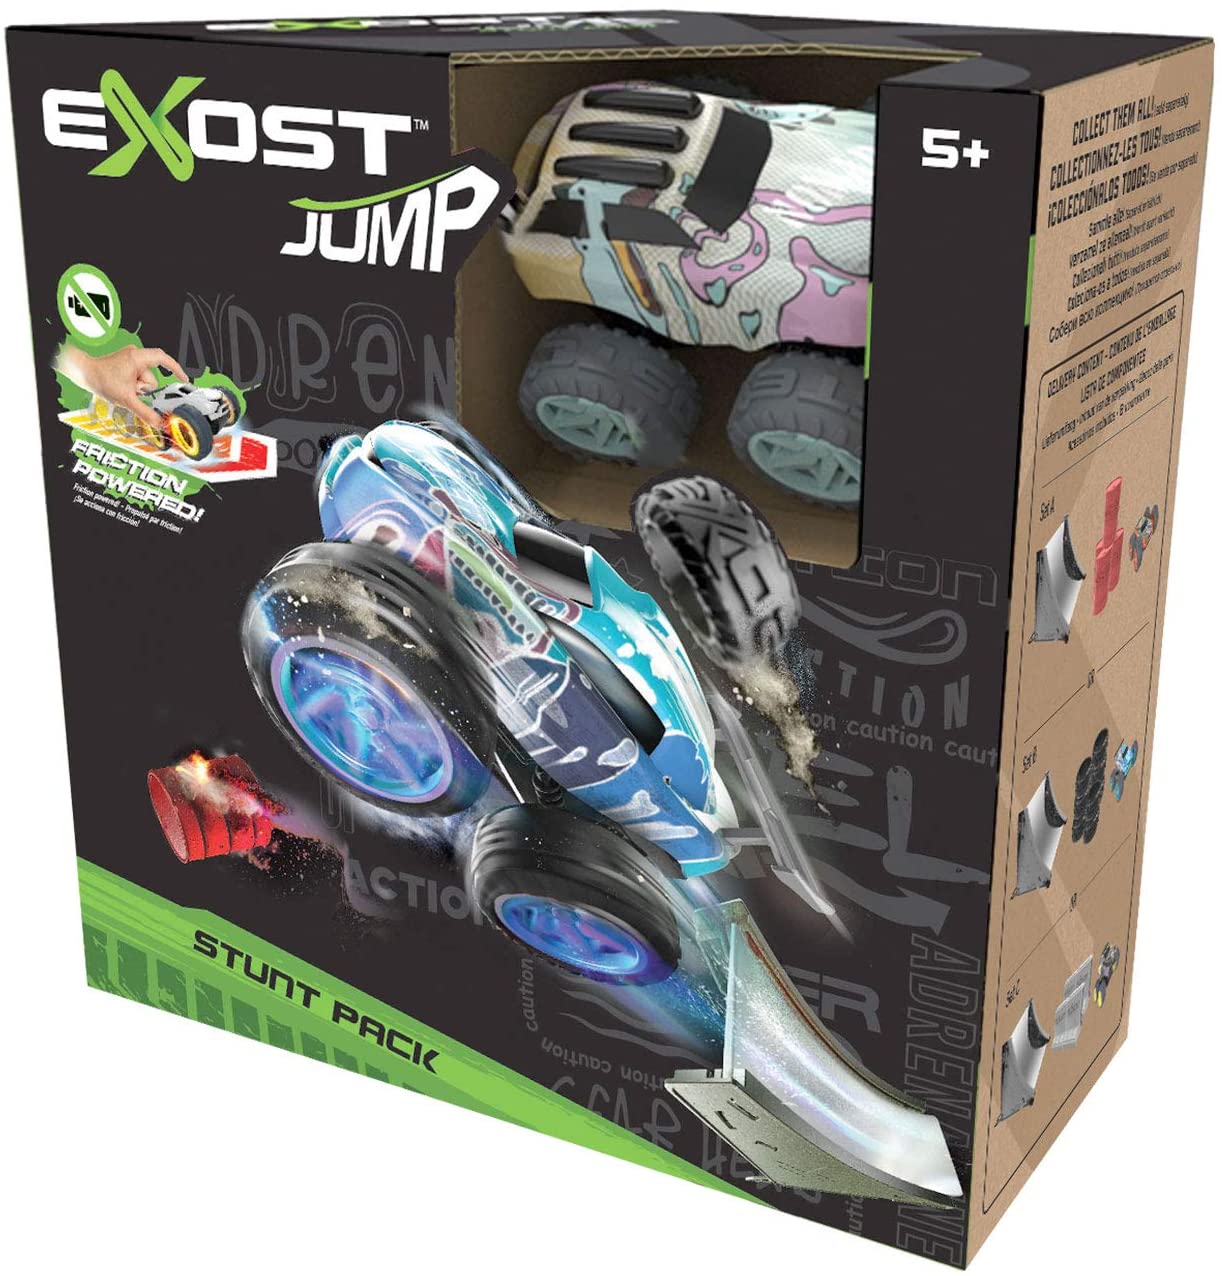 Exost R/c Jump Stunt Pack 20620